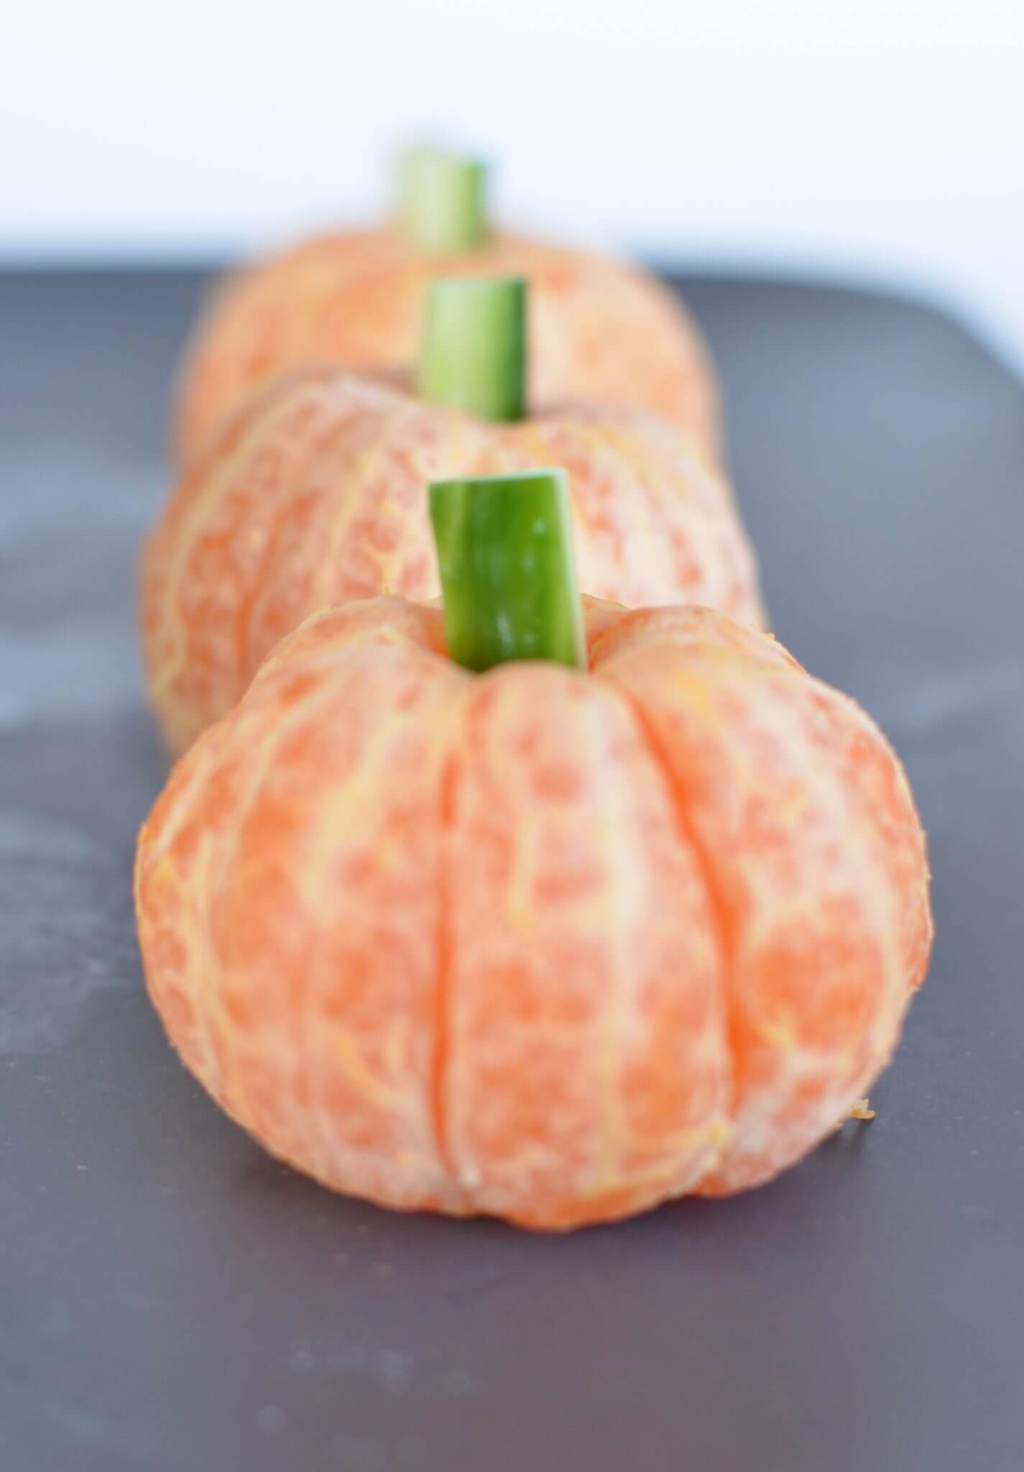 Healthy halloween treats with fun pumpkins made from mandarins